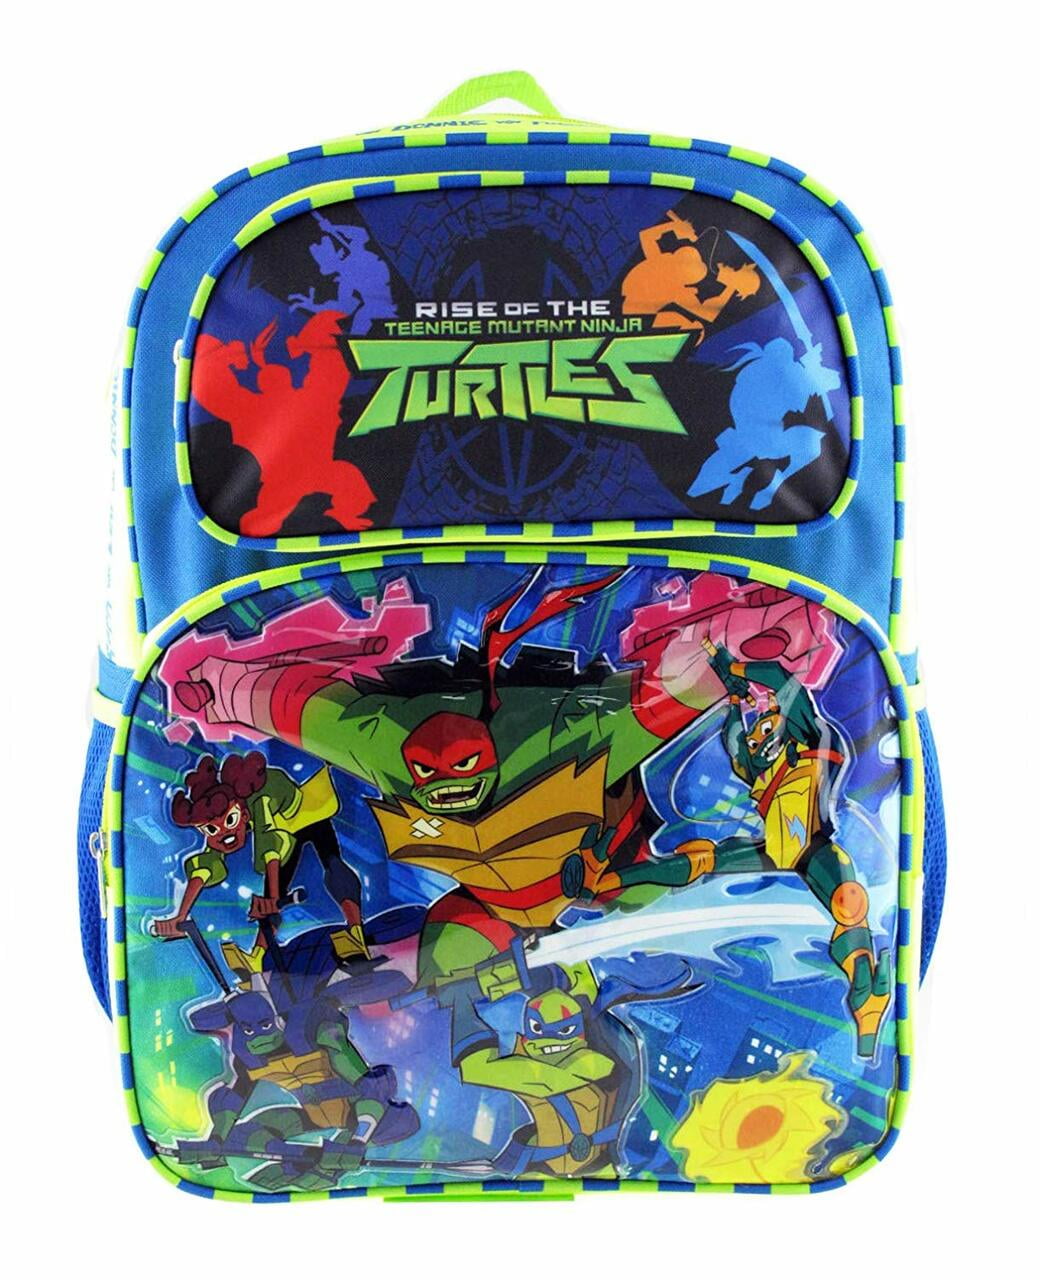 *NEW* Nickelodeon Rise of the Teenage Mutant Ninja Turtles Backpack 5 Pc Set 